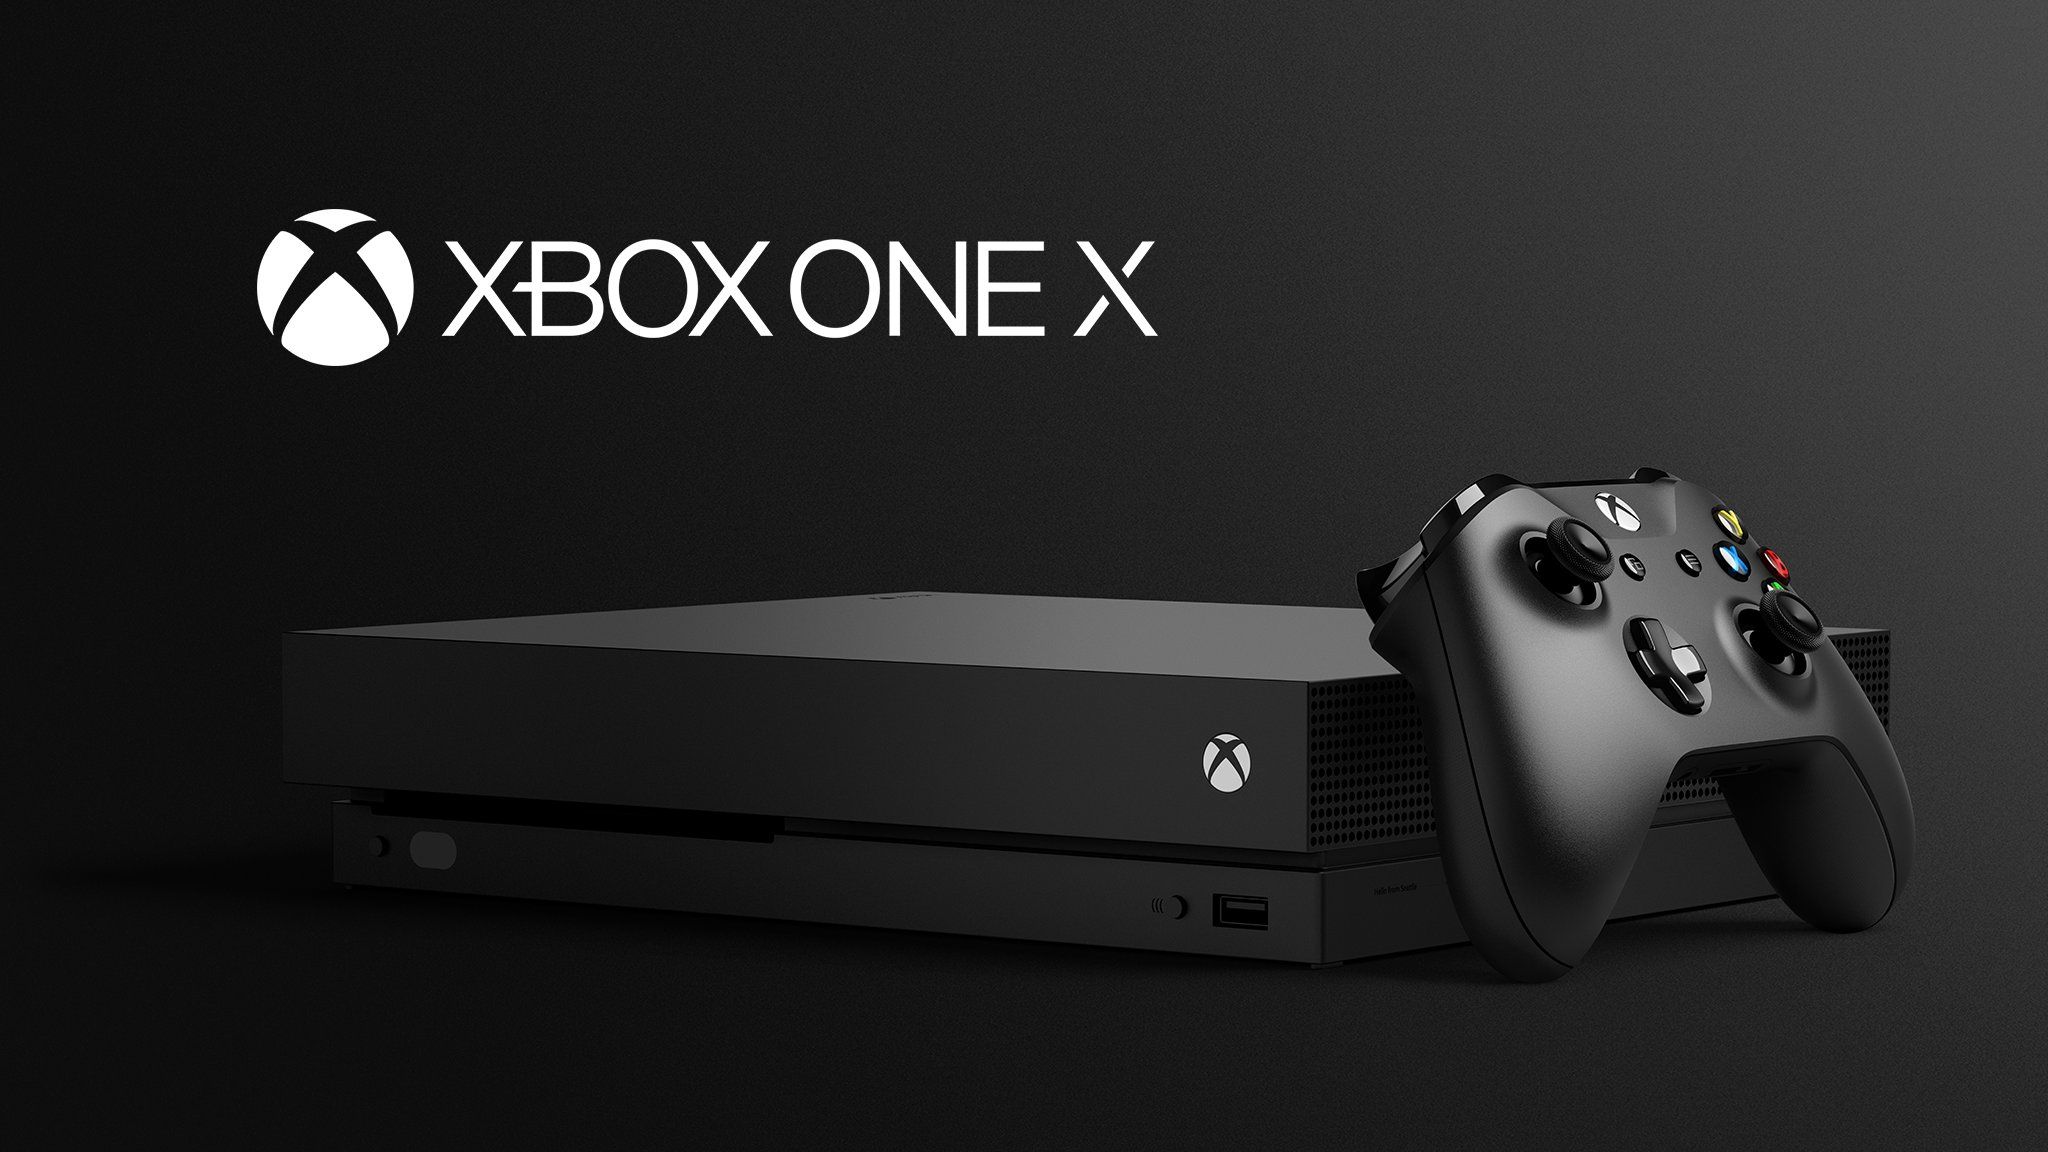 Xbox One X Price, Release Date, & Specs Revealed